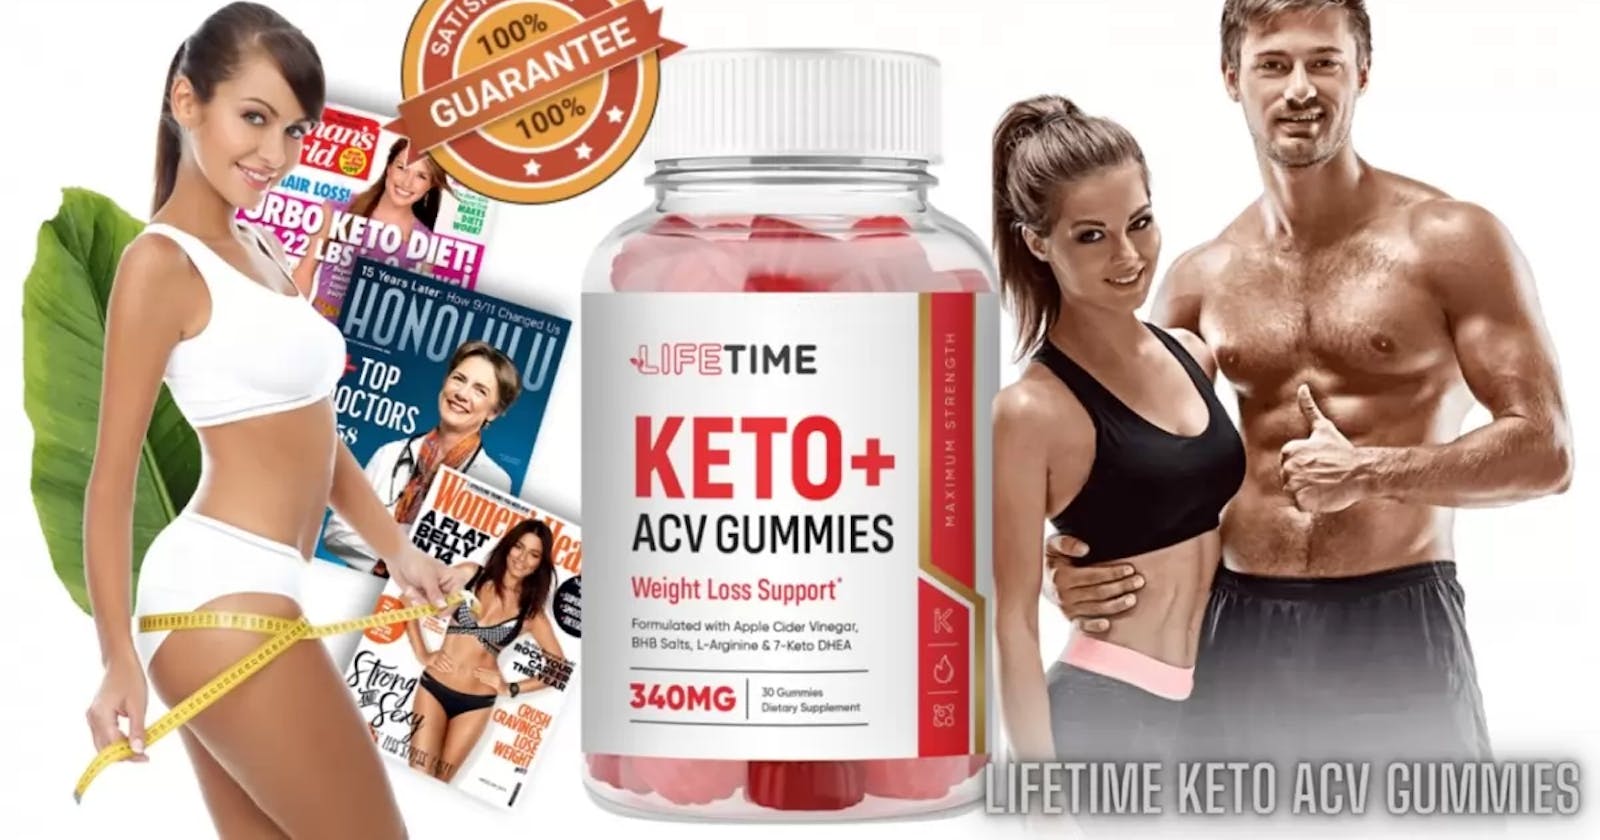 Lifetime Keto ACV Gummies Official Website Ingredients & Side Effect